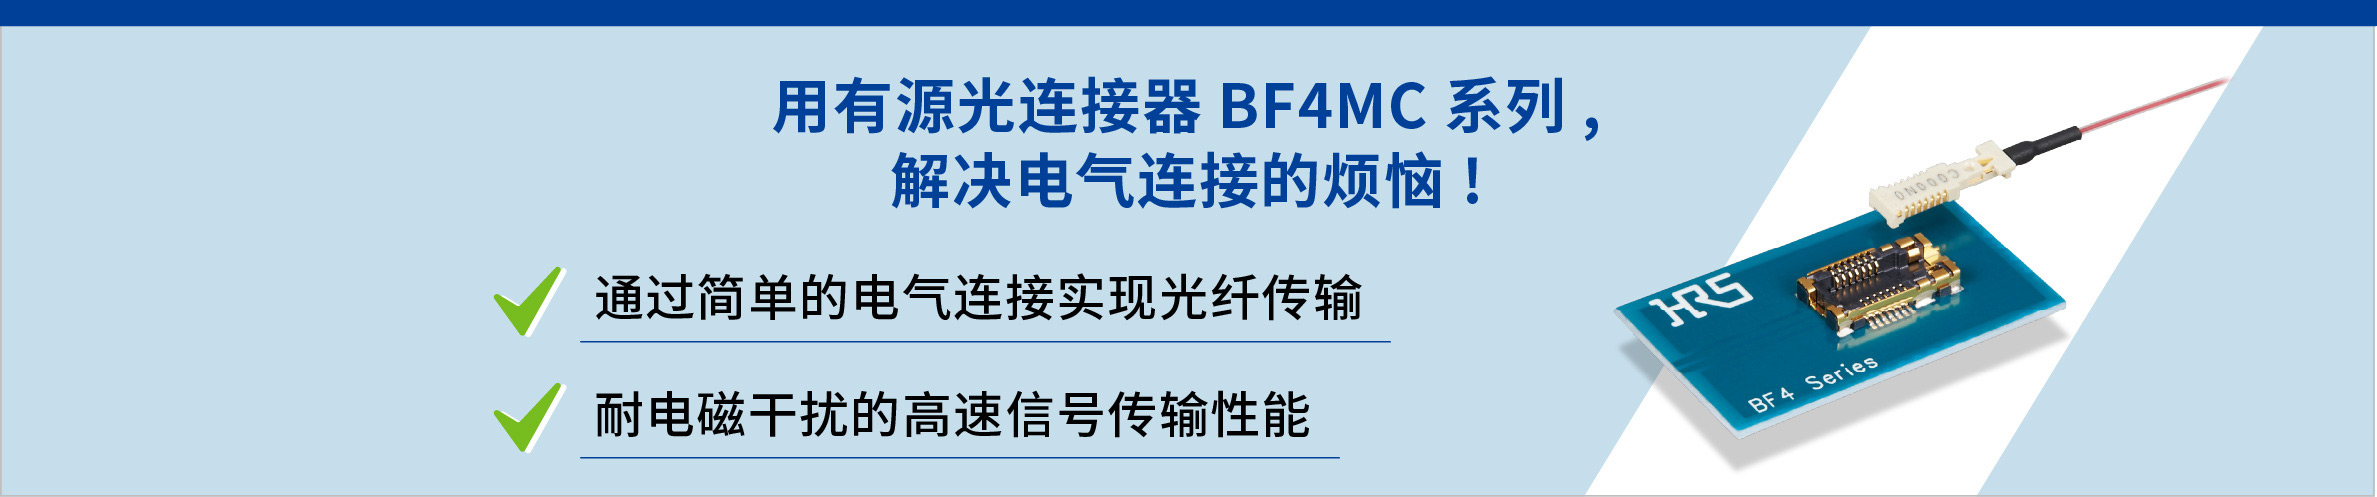 BF4MC_Banner_ZH.jpg